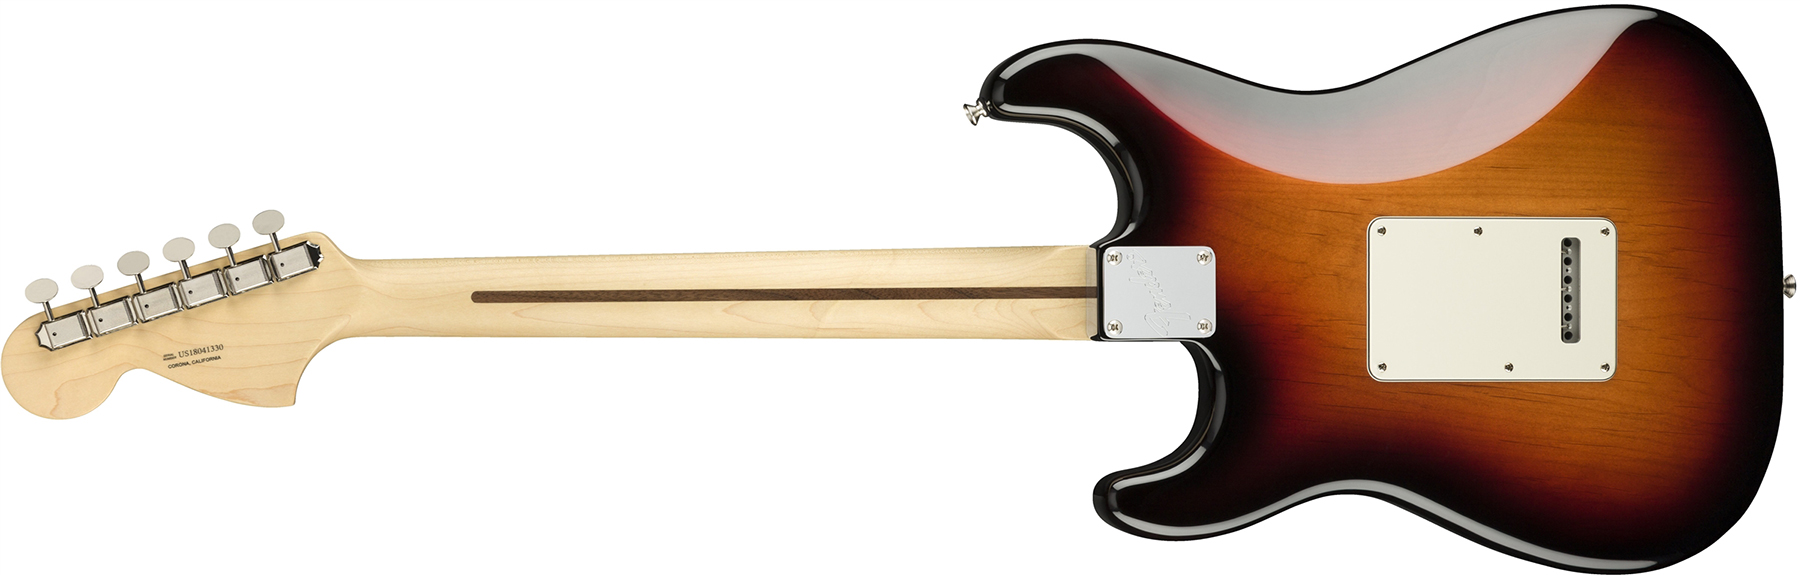 Fender Strat American Performer Usa Hss Rw - 3 Color Sunburst - Str shape electric guitar - Variation 1